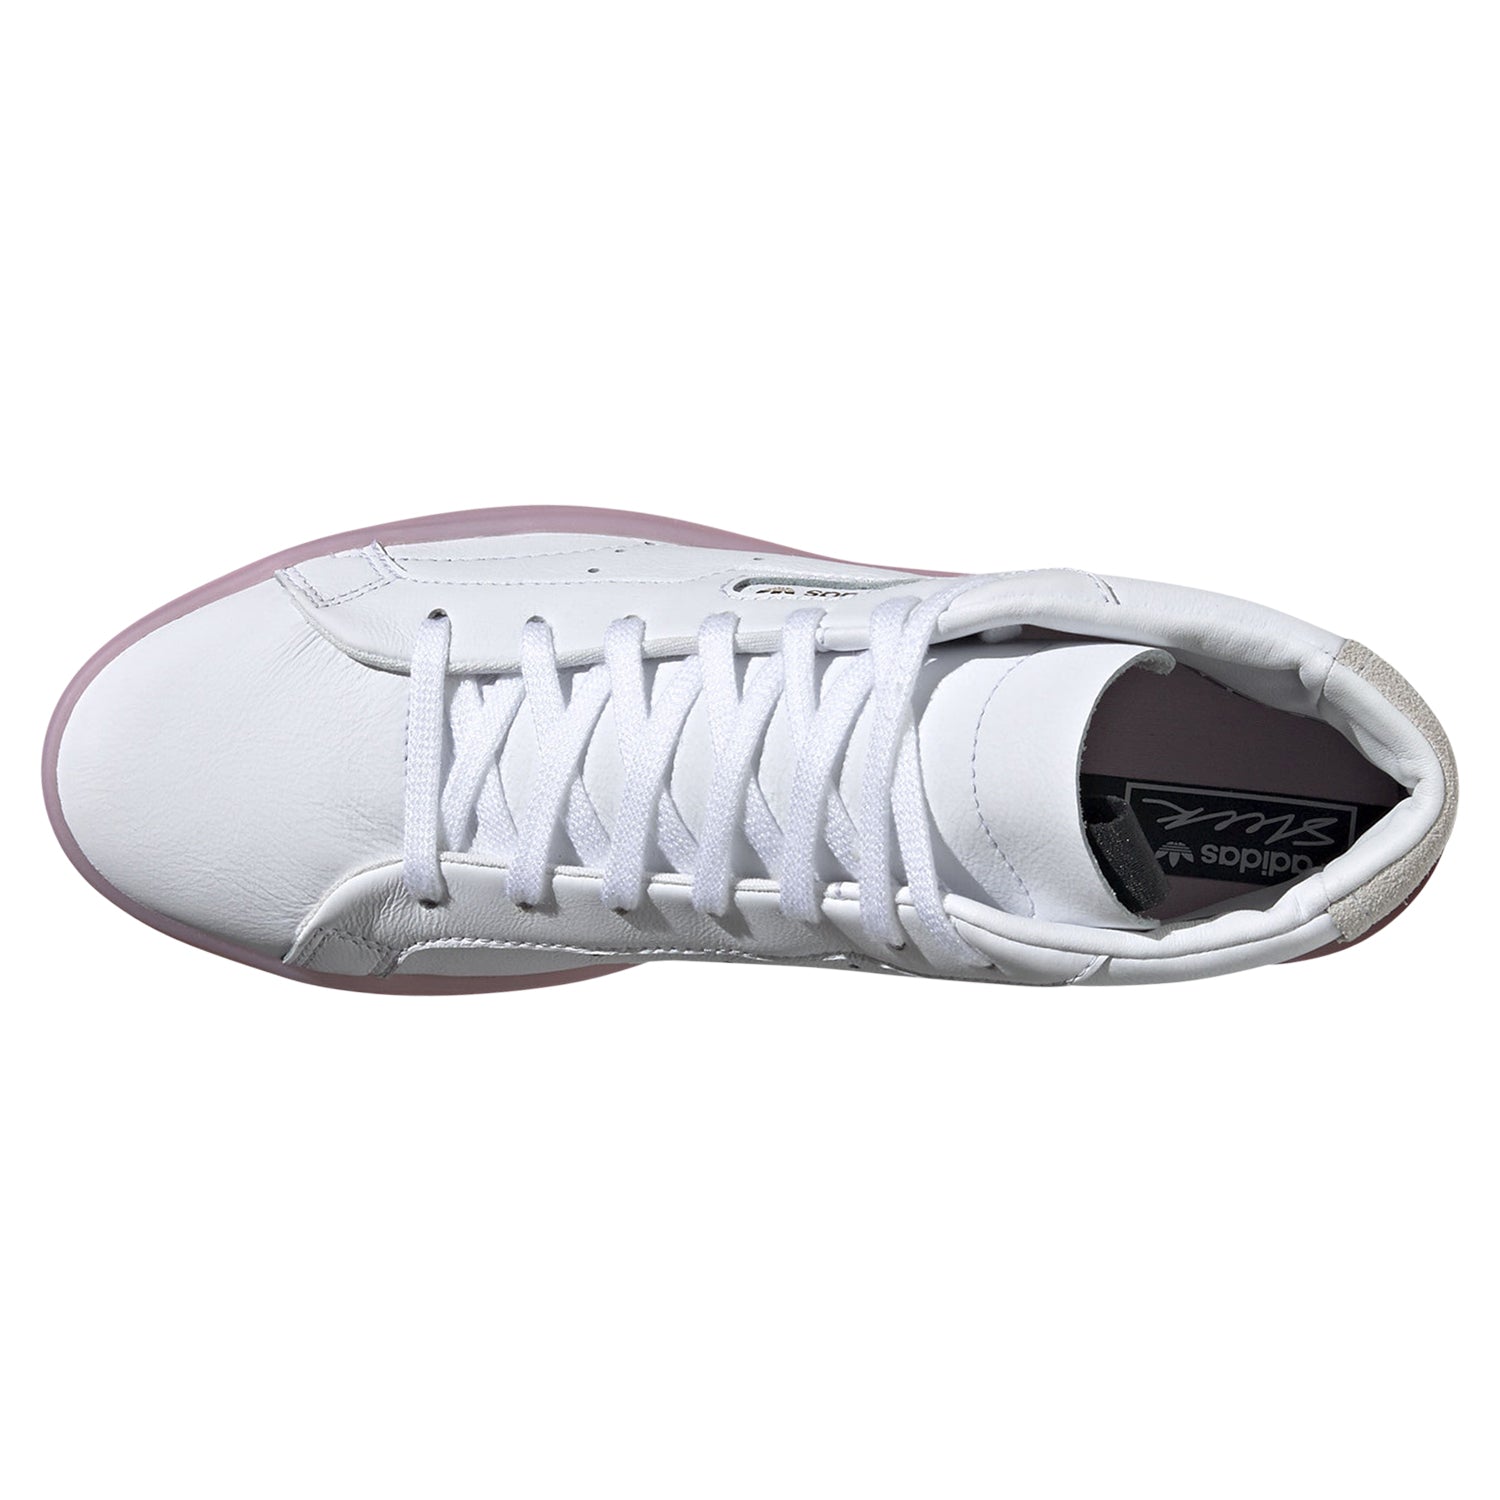 Elocuente Calma Blanco adidas Originals Women's Sleek Mid Shoes - White EE8612 - Trade Sports